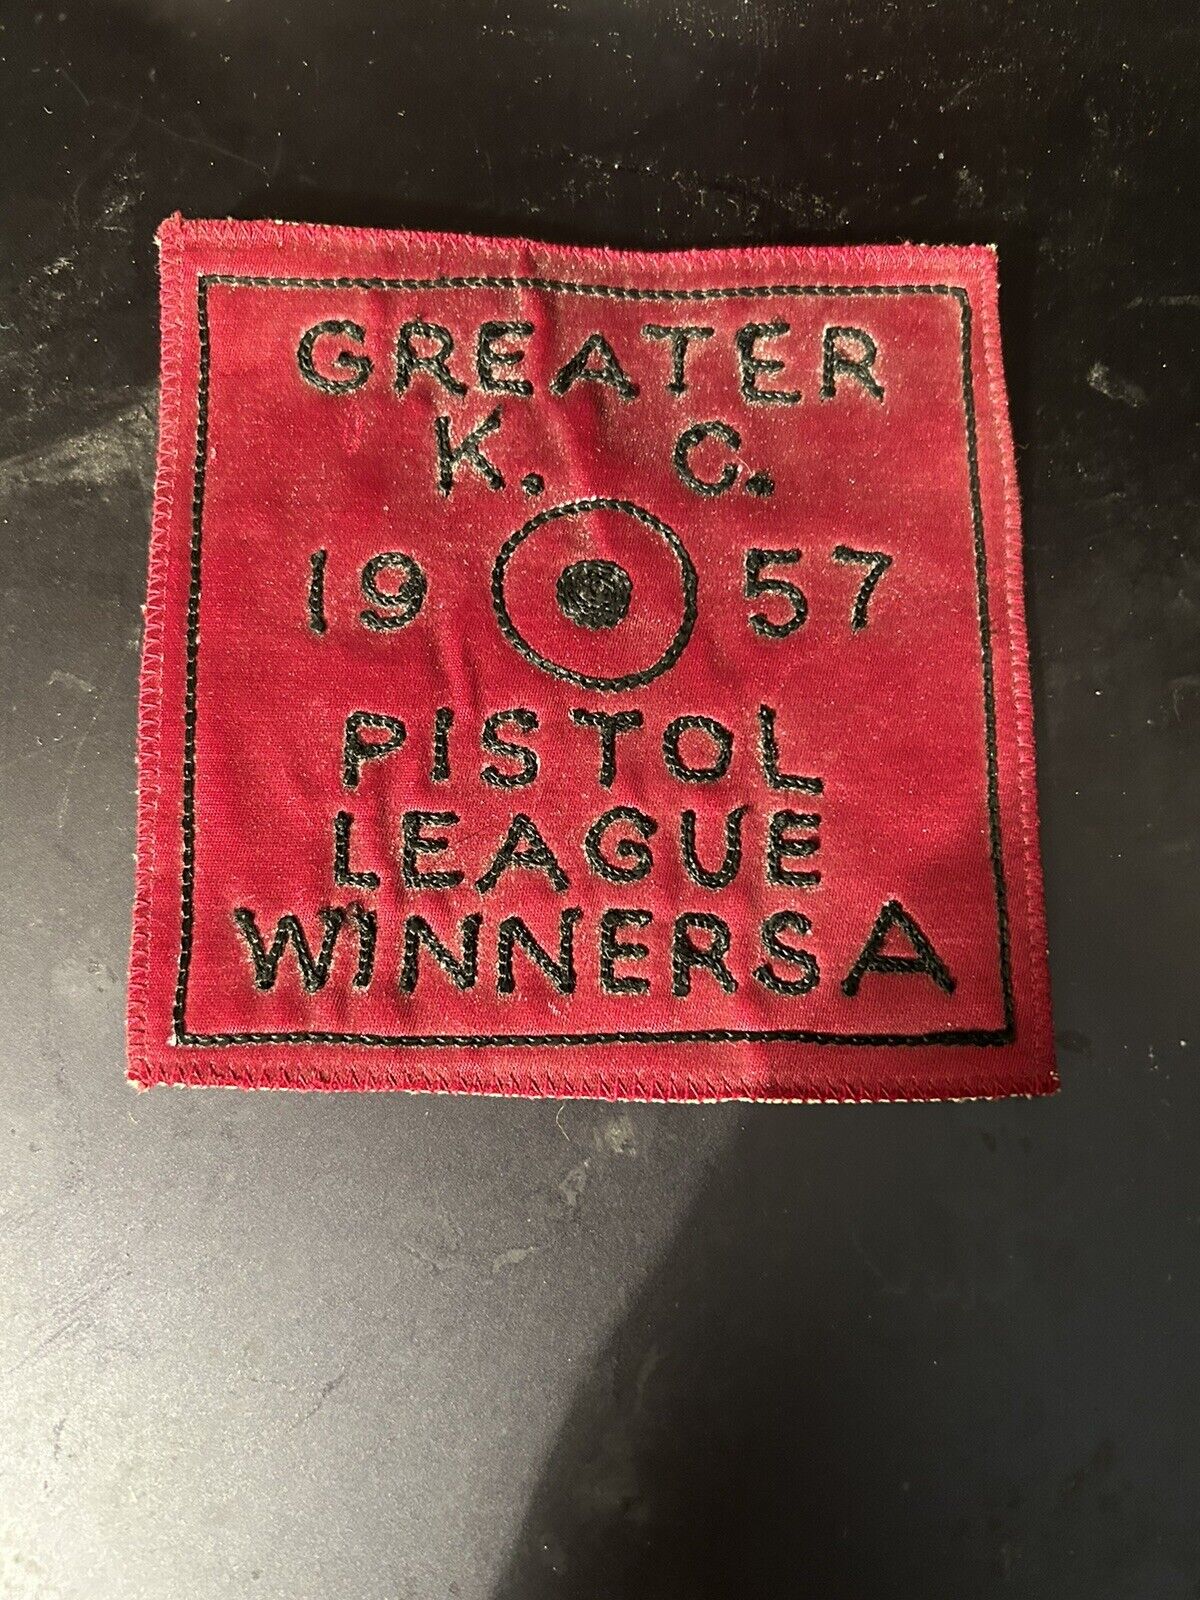 Greater Kansas City, MO. Pistol League Winners A-1957 Patch